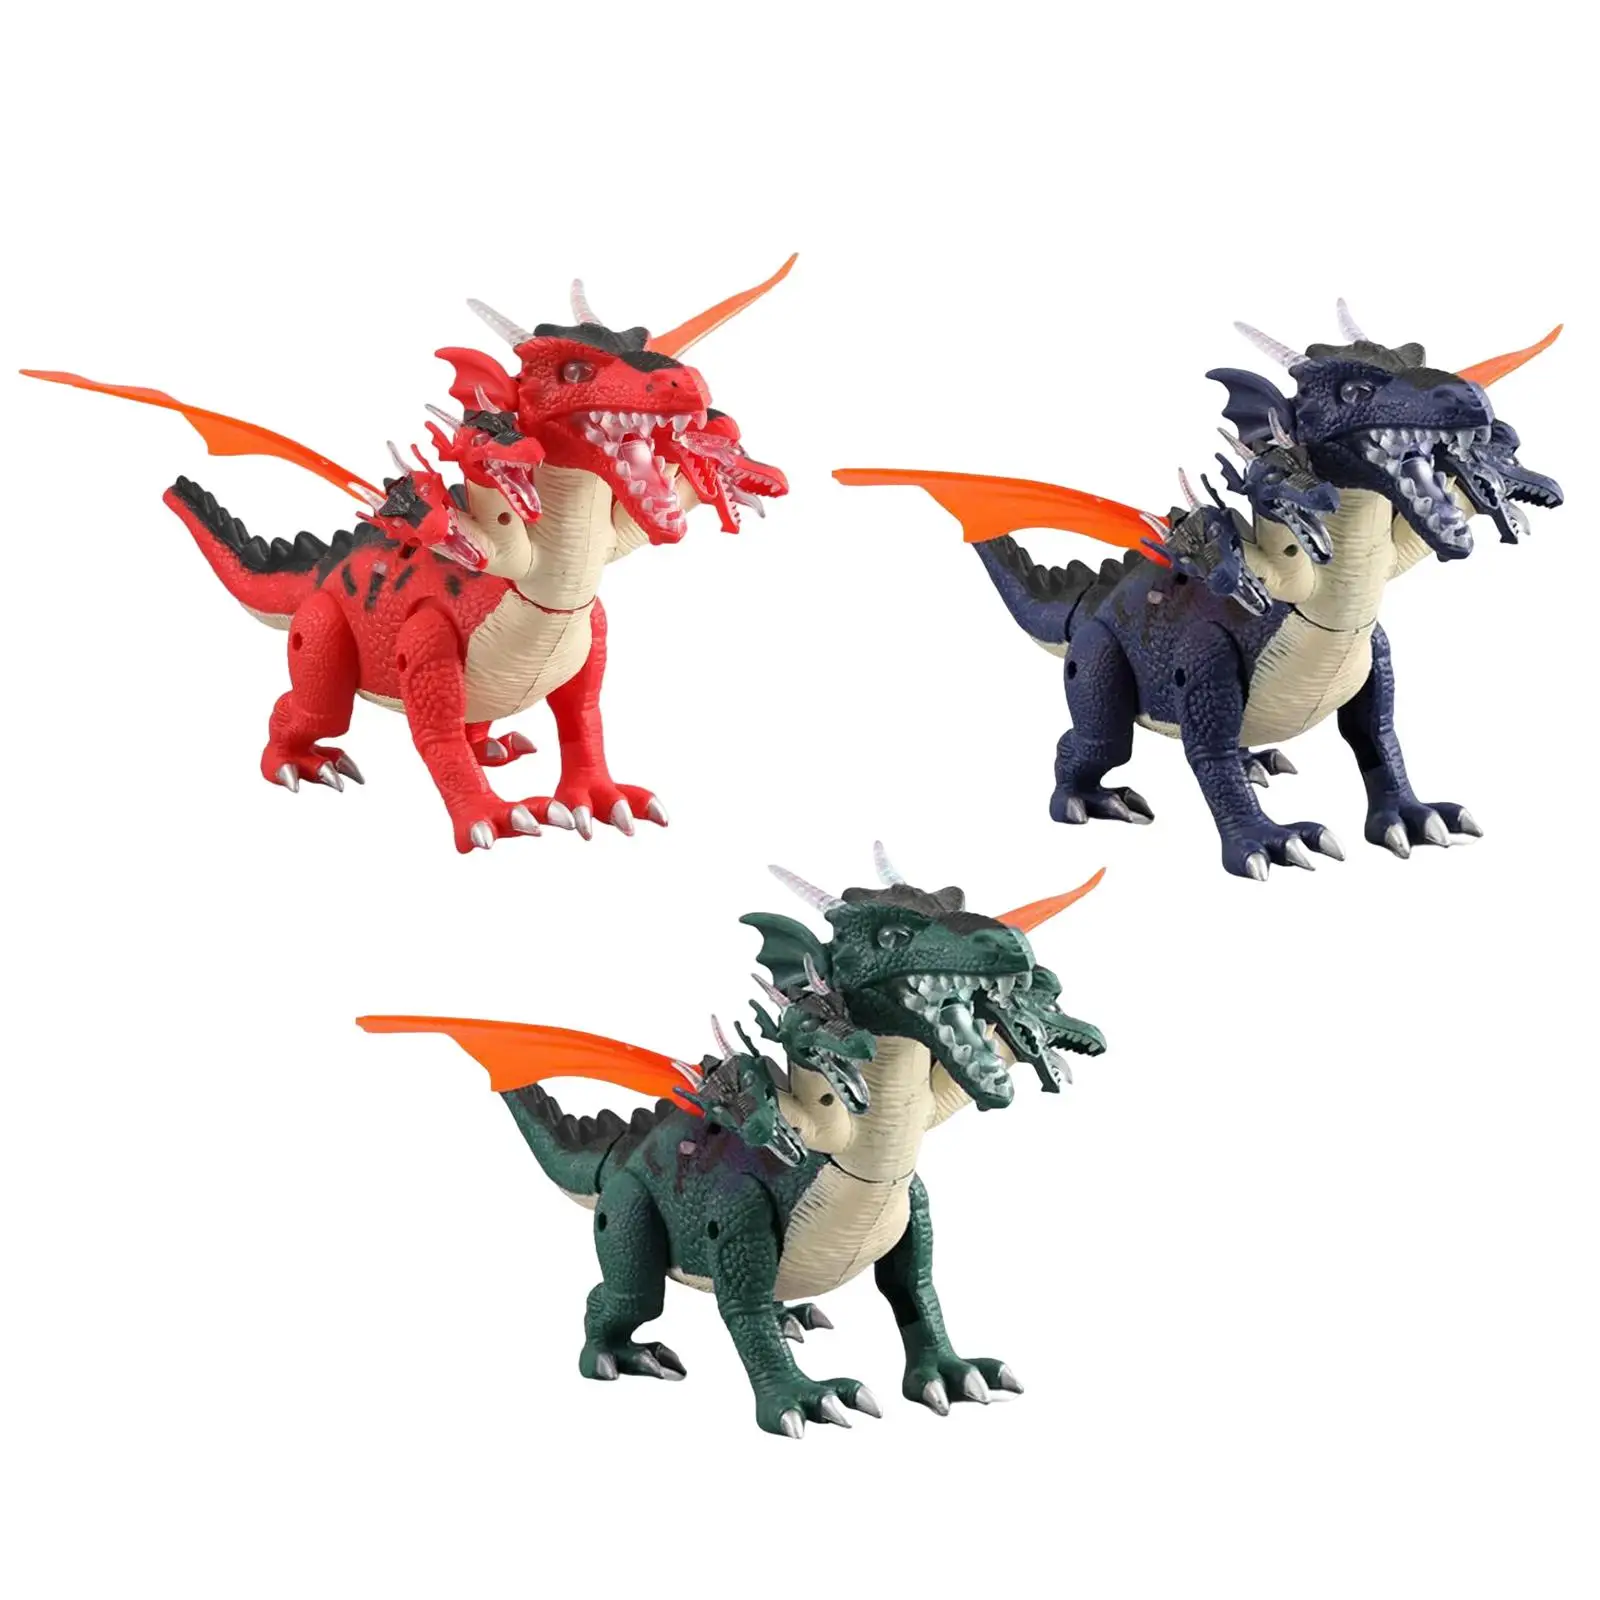 Electric Dinosaur Toys with Lights Realistic Sounds Spray Walking Dinosaur Educational Toys Girls Boys Kids Preschool Toy